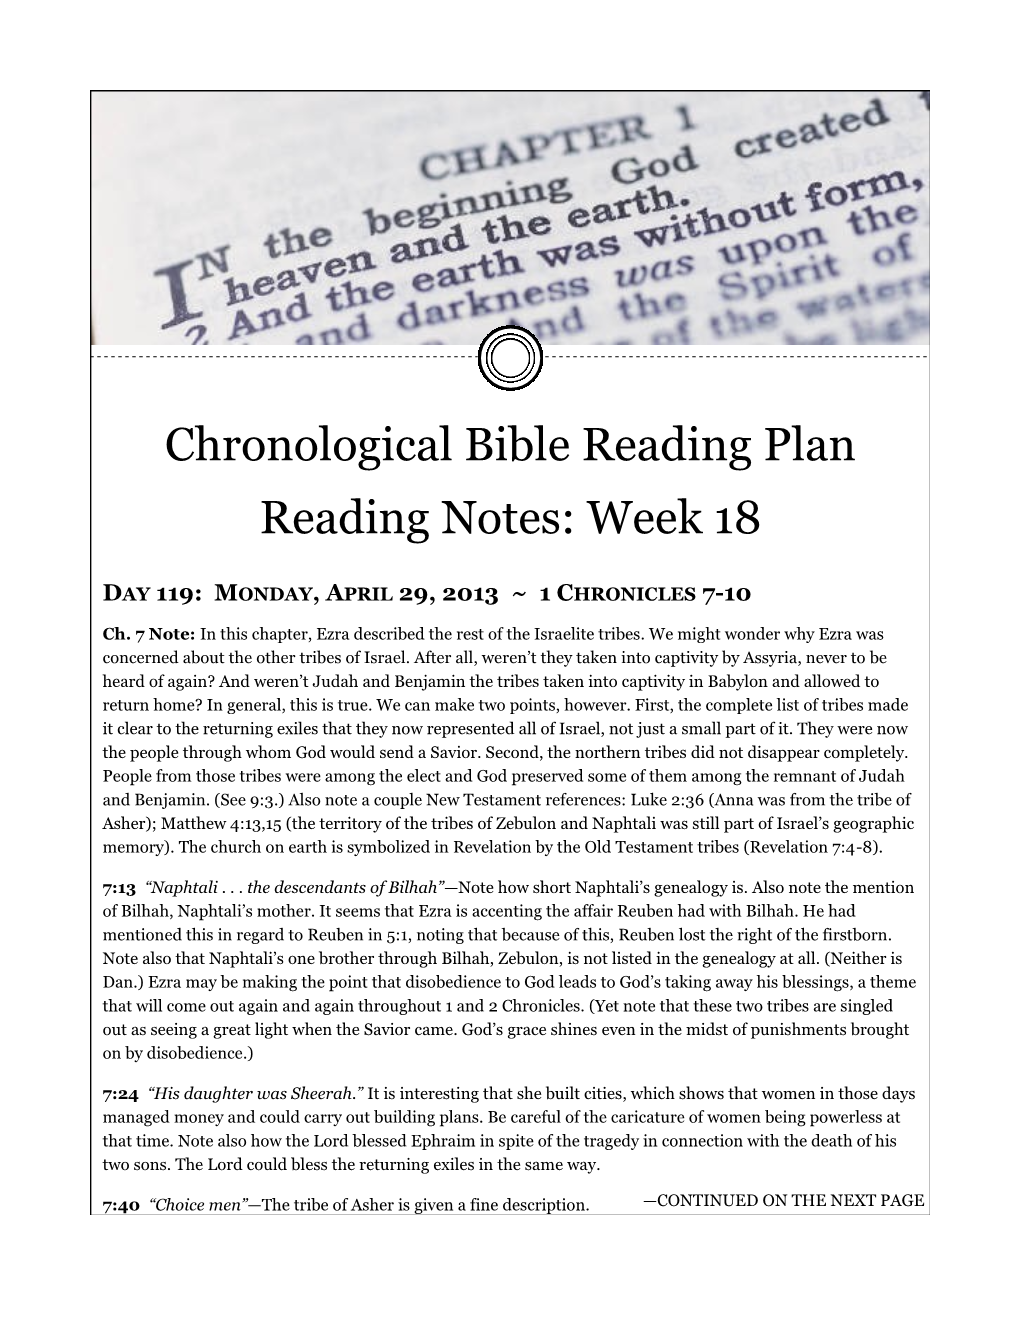 Chronological Bible Reading Plan Reading Notes: Week 18